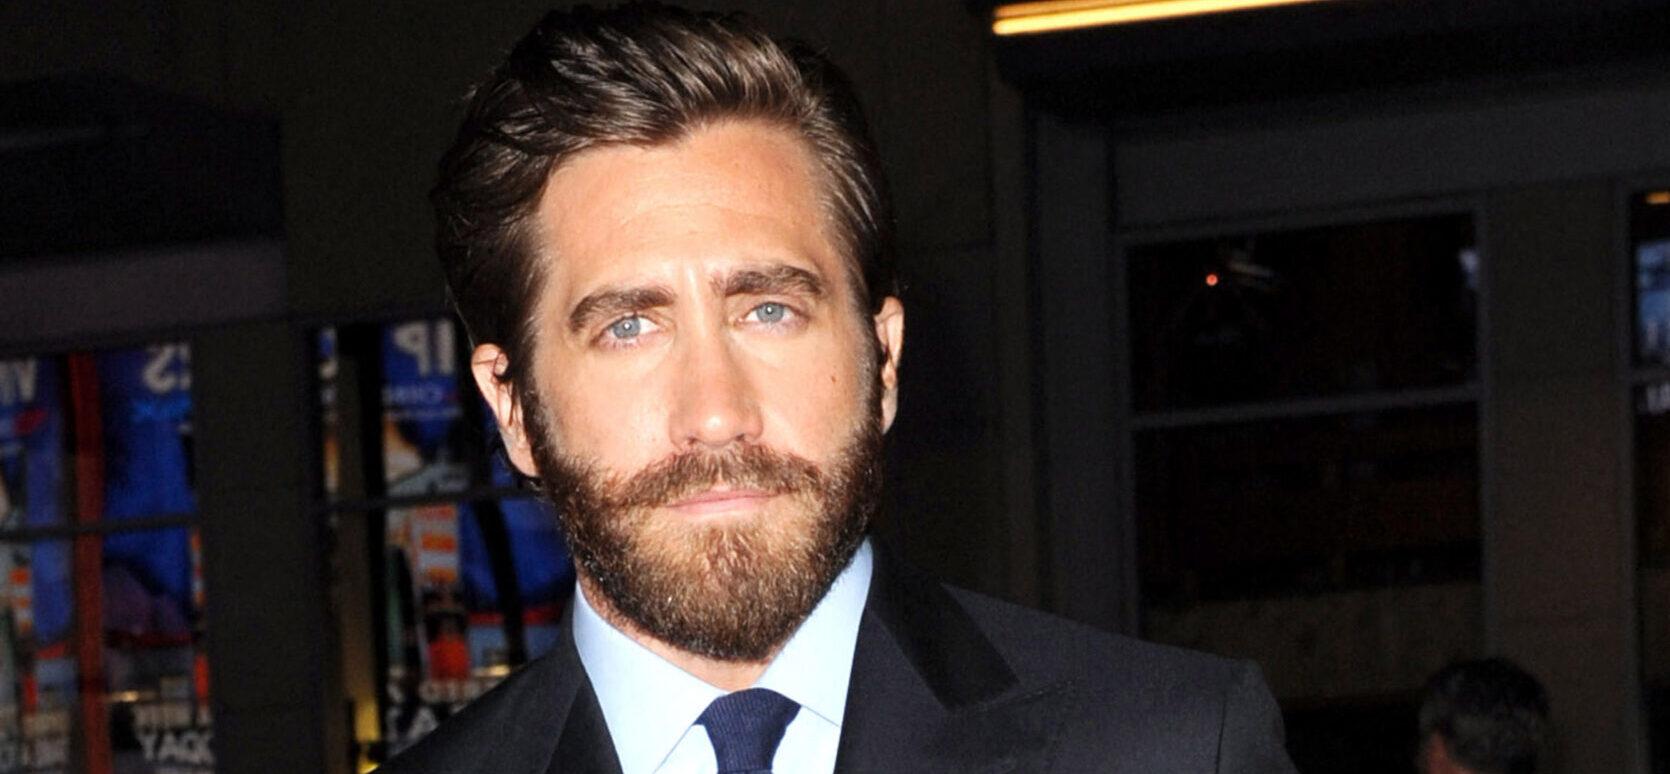 Director Breaks Silence On Jake Gyllenhaal Reportedly Ruining Film With Erratic Behavior